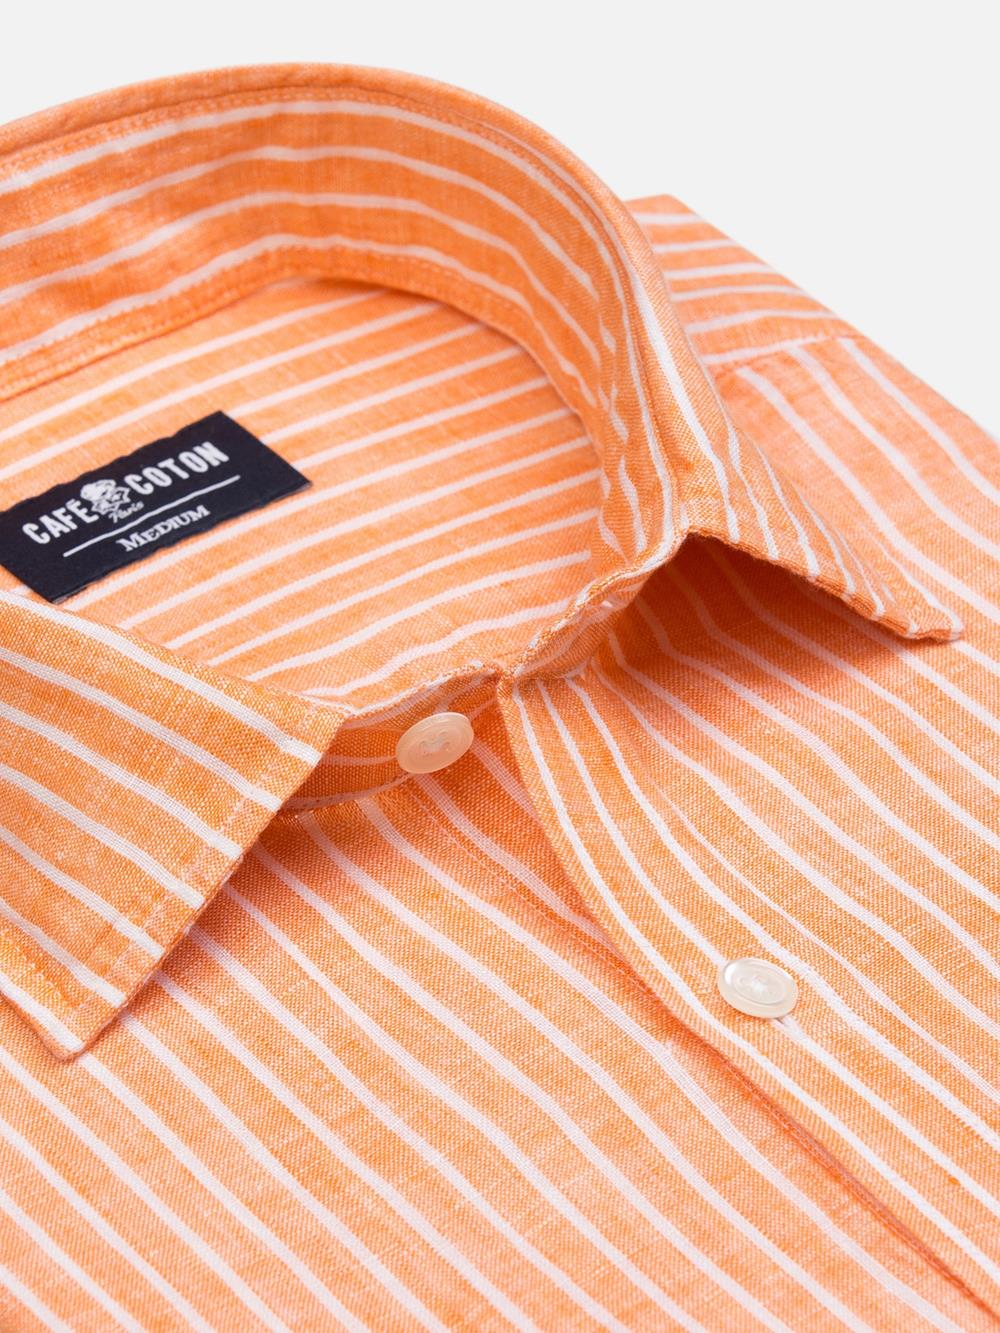 Karl shirt in orange linen stripes